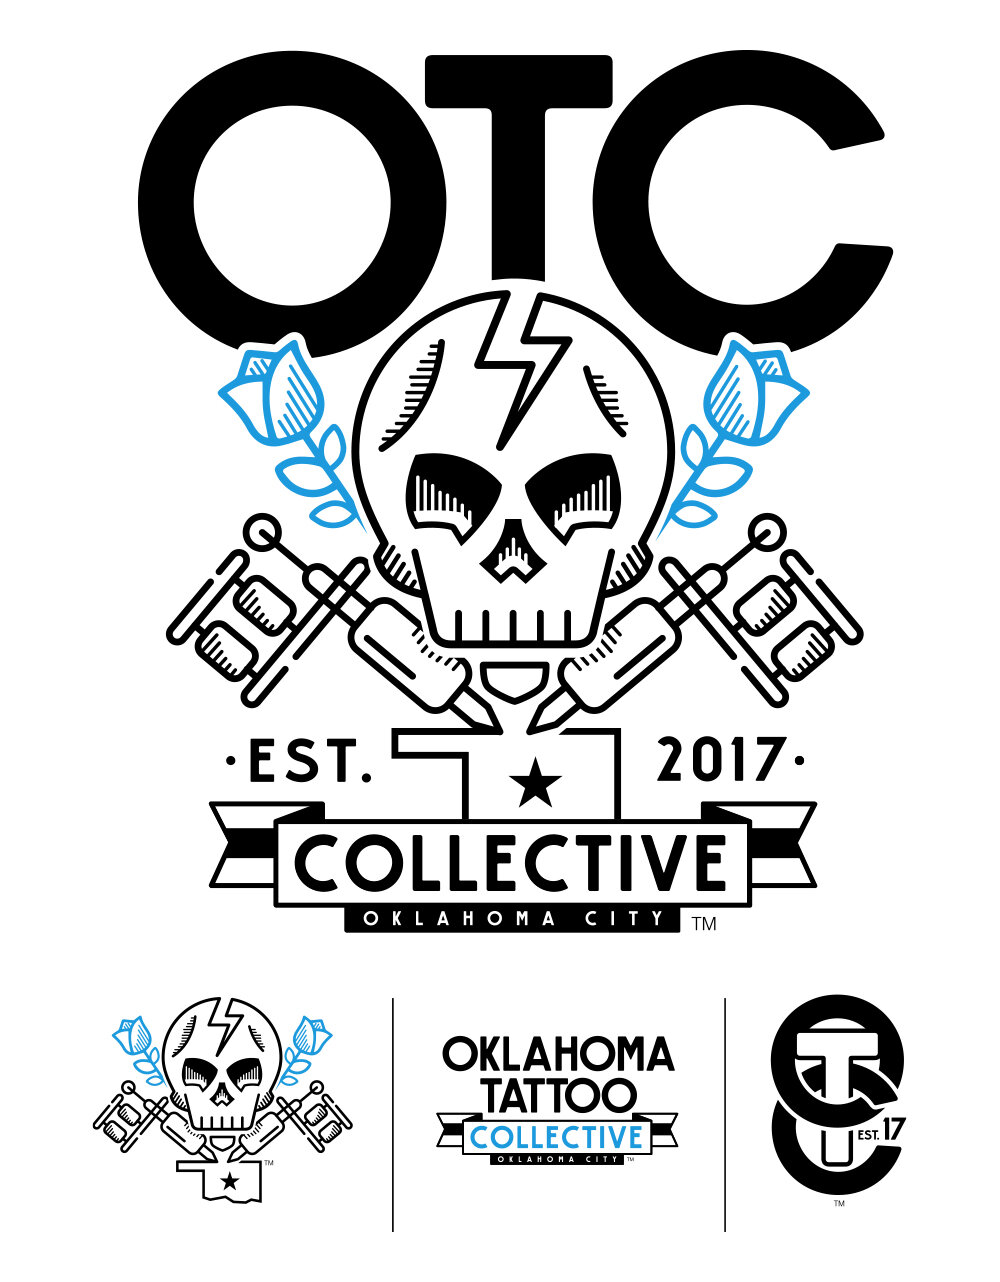 Oklahoma Tattoo Collective